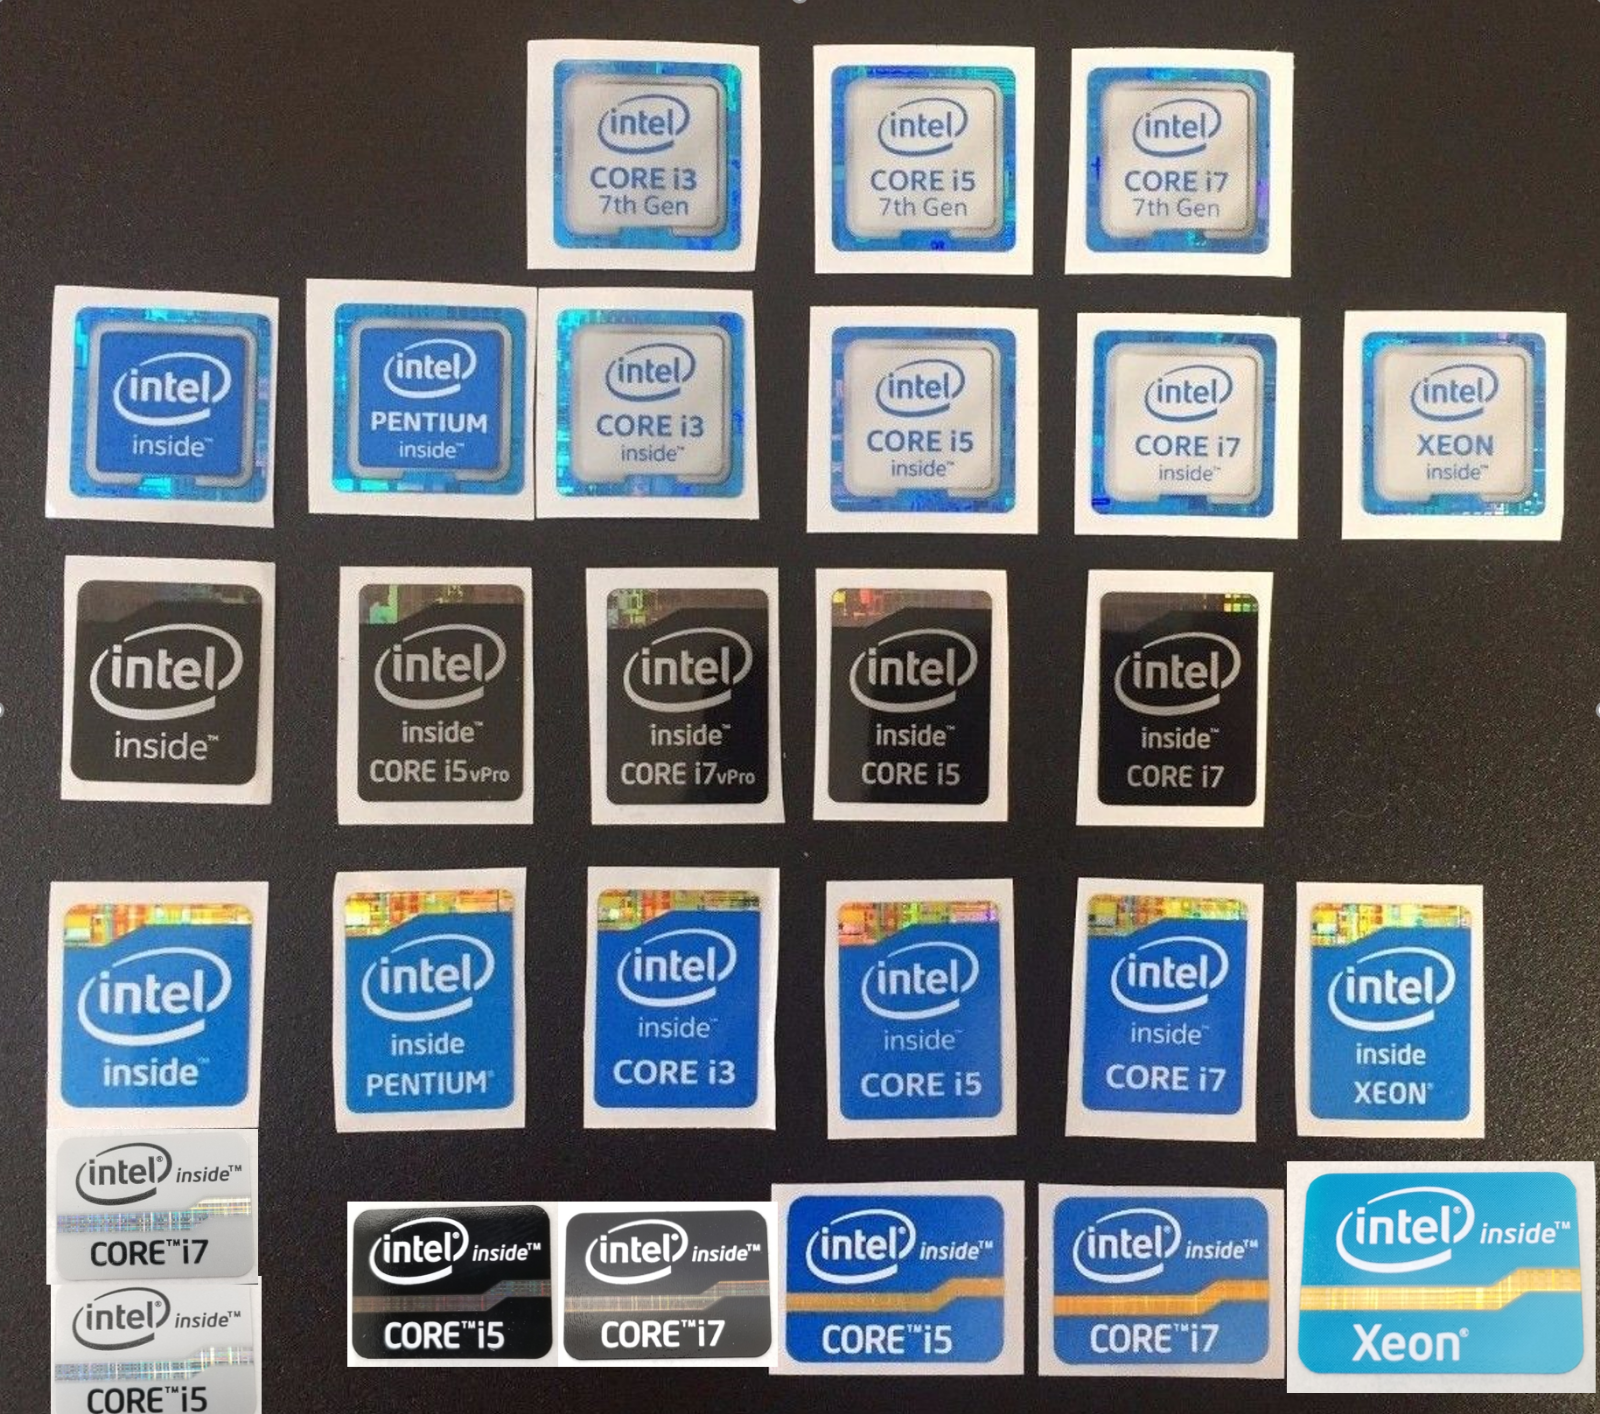 Наклейка Intel Core i5 5th Gen. Наклейка Intel Core i7 6th Gen. Наклейка Intel Core i7 inside. Intel Core i5 наклейка 7 Gen. Наклейки intel